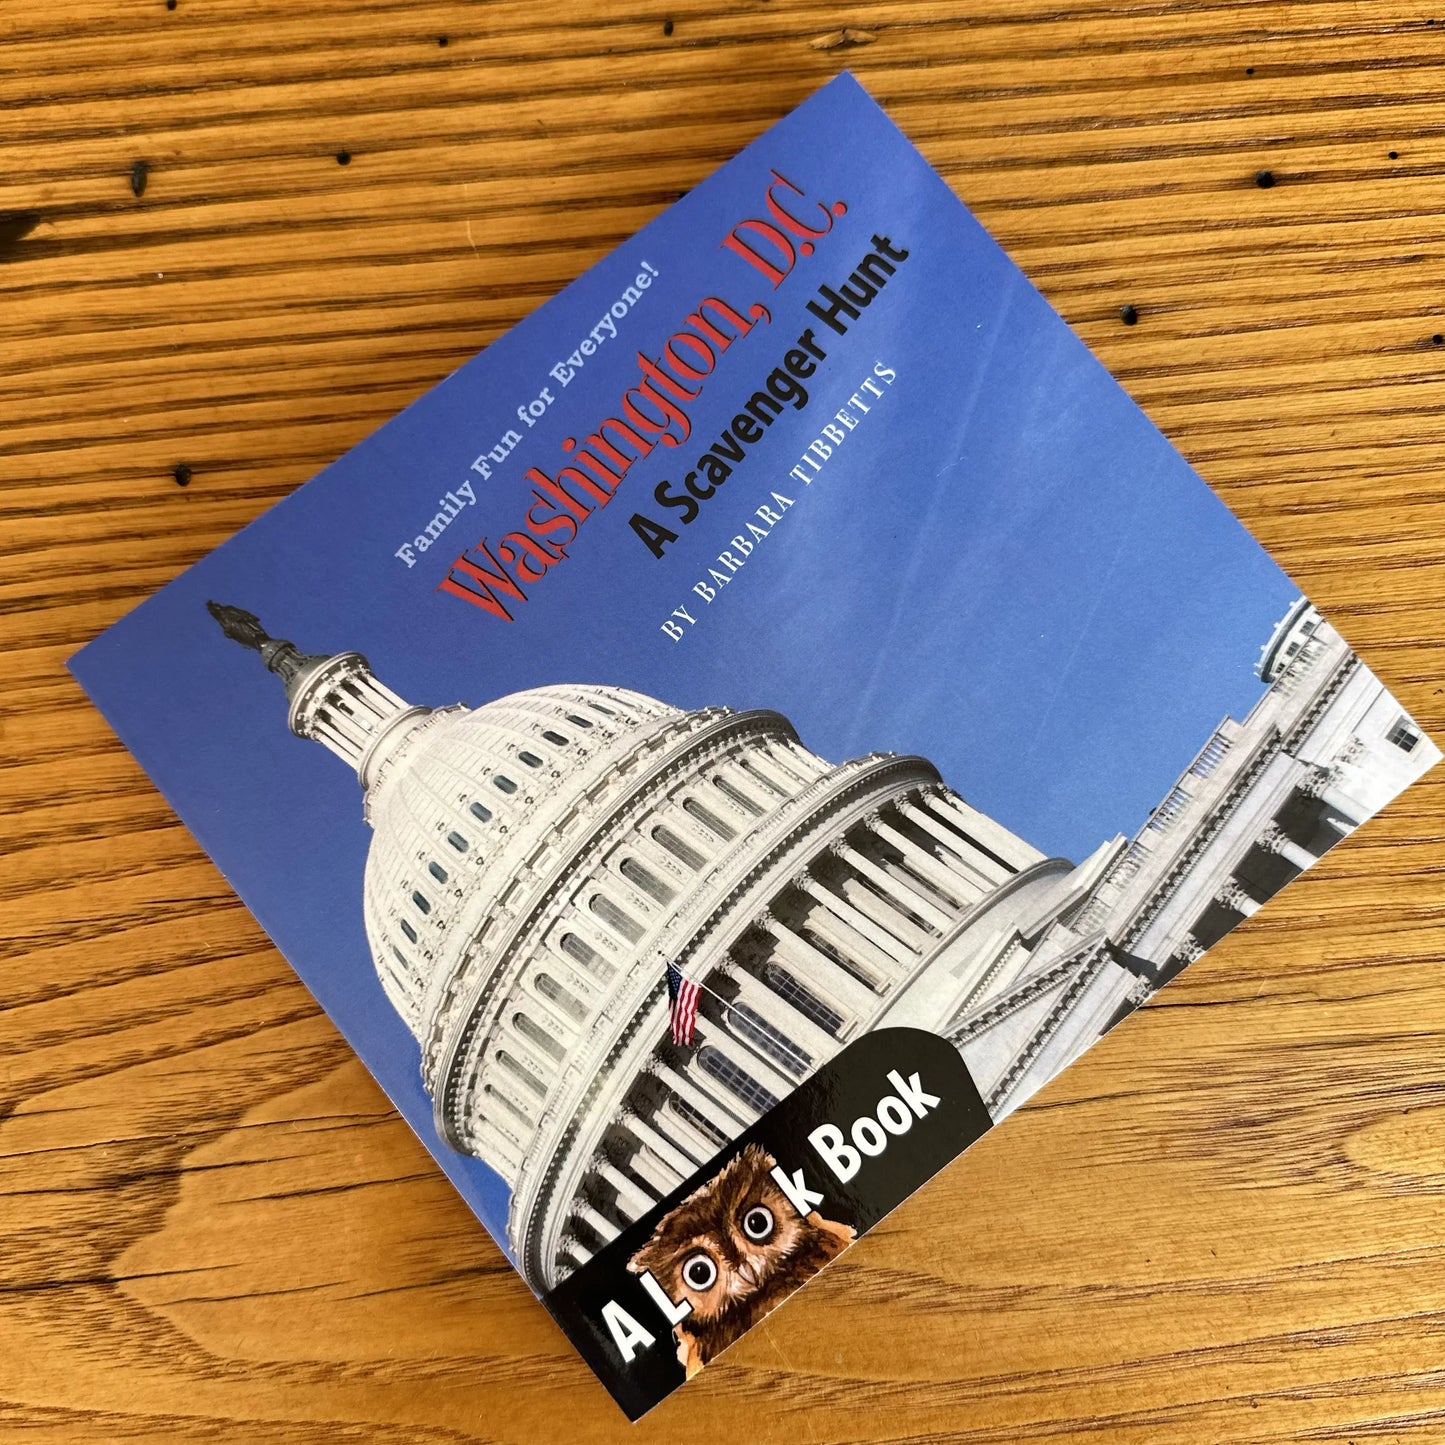 The LOOK Book "Washington, DC: A Scavenger Hunt" by Barbara Tibbetts